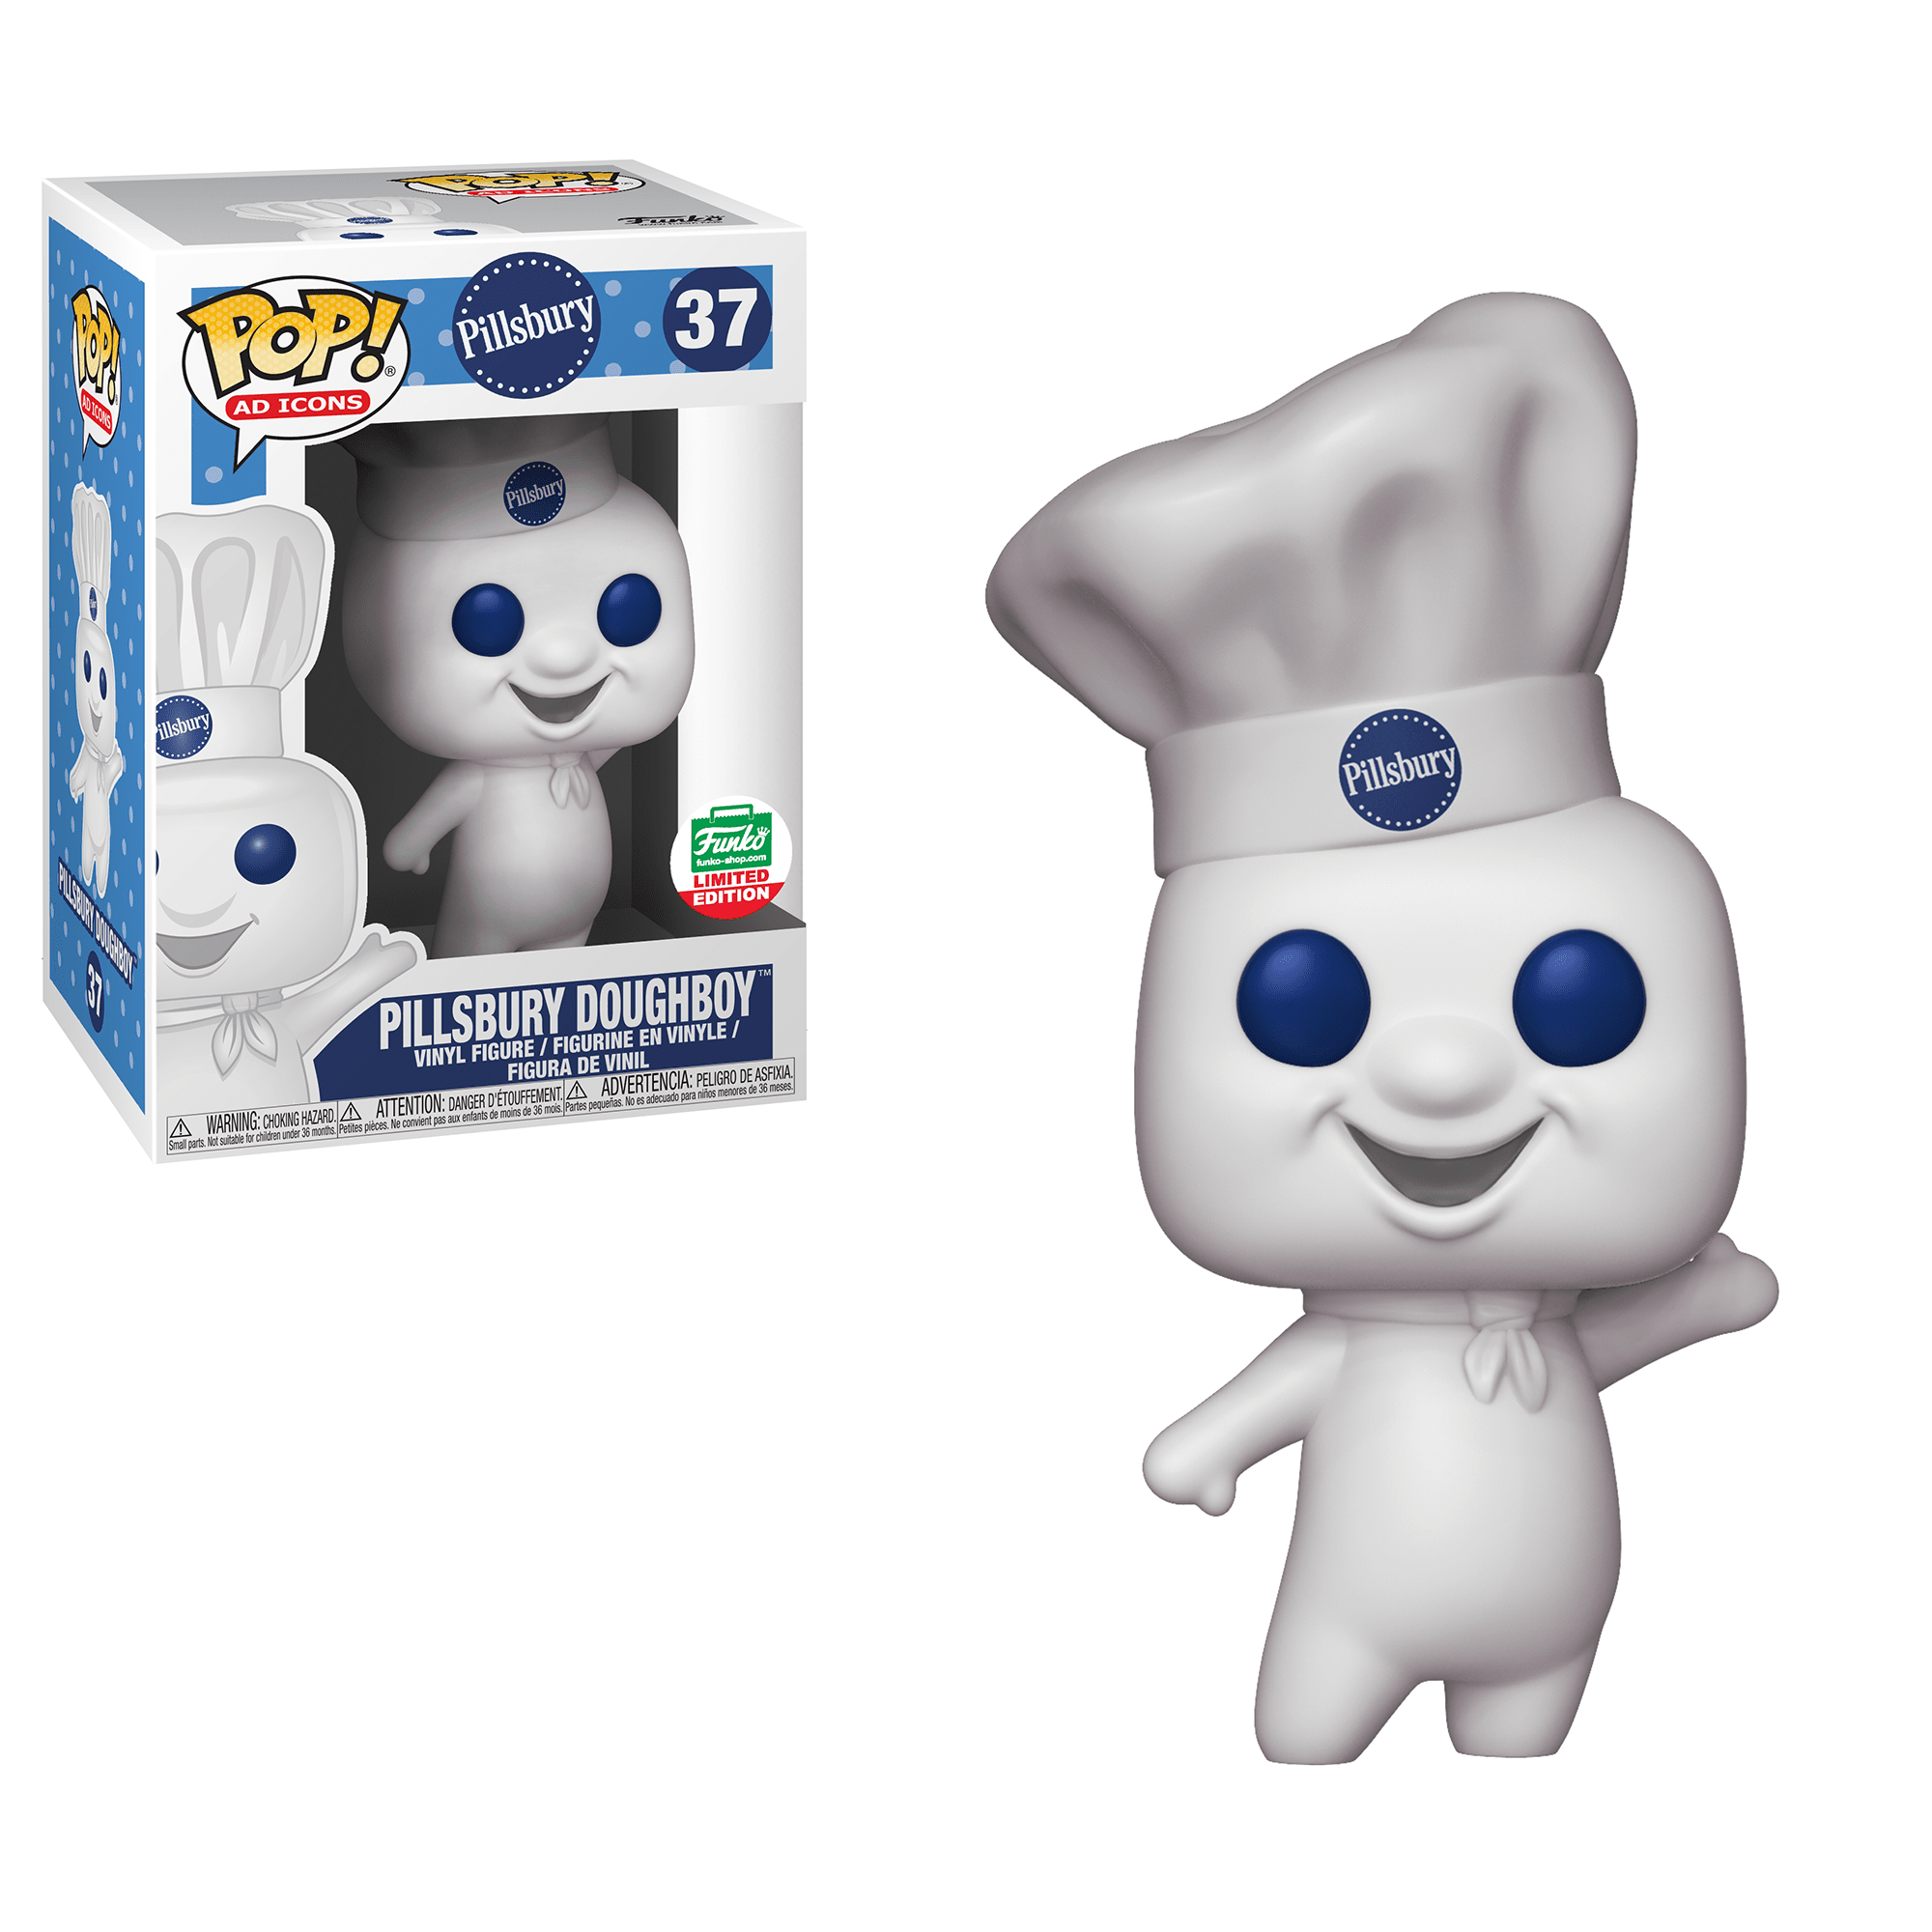 Funko Pop! Pillsbury Doughboy (Ad Icons)